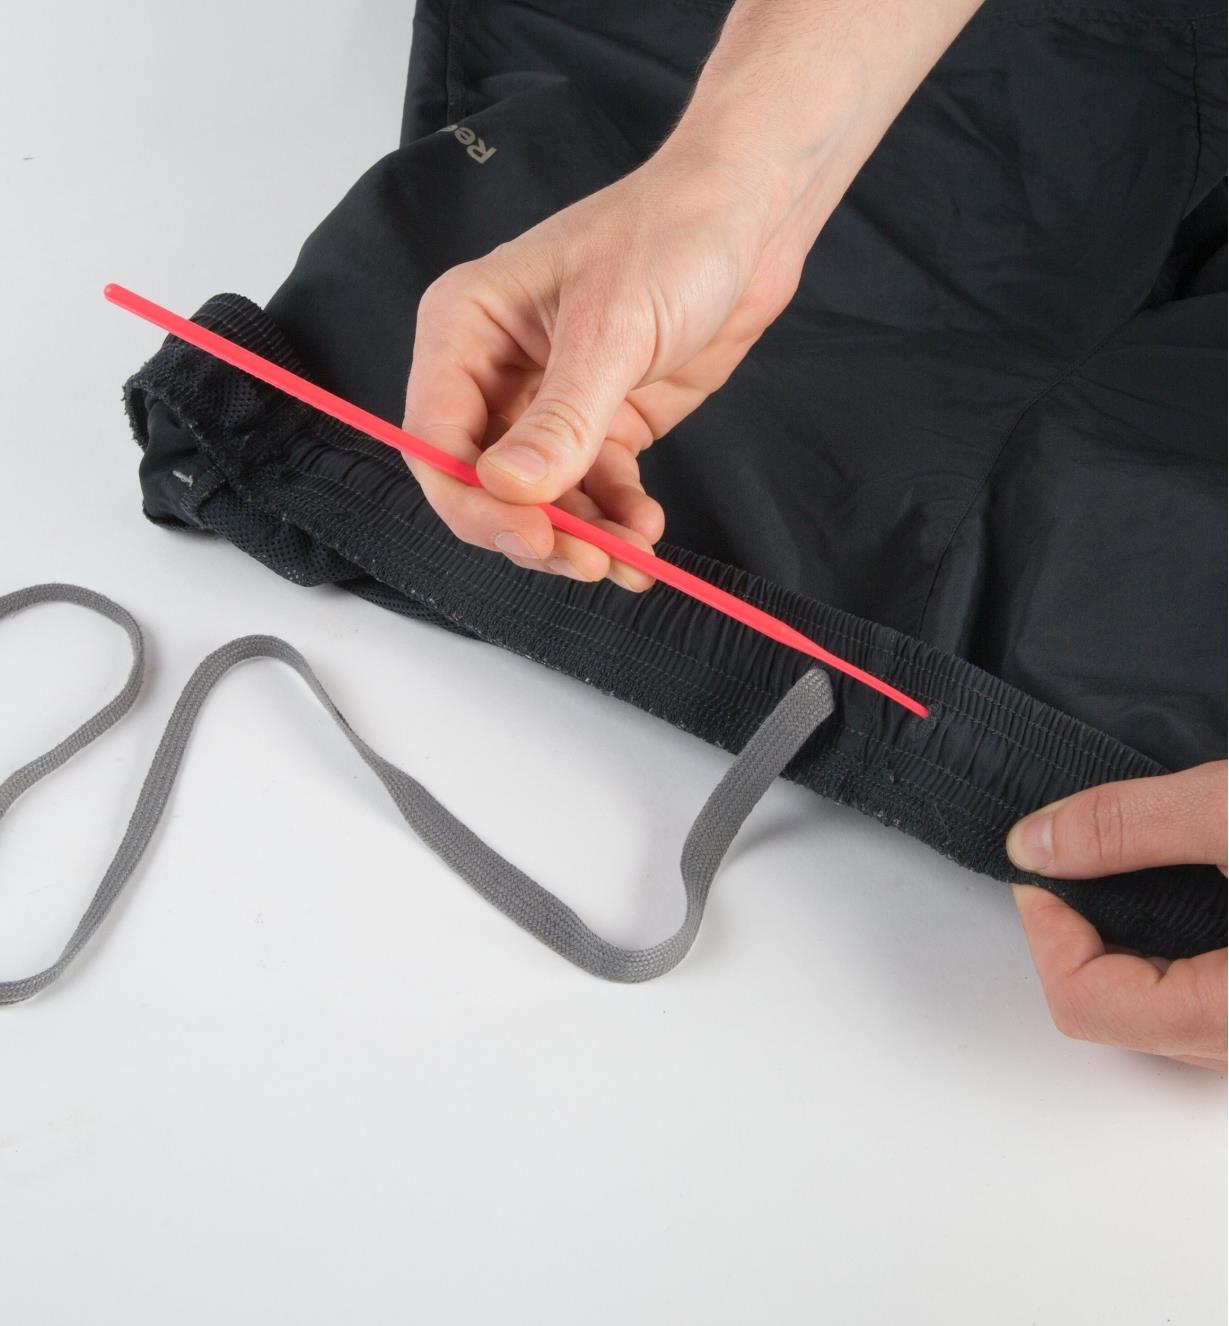 Metal Drawstring Threader Metal Tweezers maxin 13 pcs Sewing Tool Kit,Including Plastic Drawstring Threader Webbing DIY Knitting Accessories Plastic Drawstring Threader Sewing Loop Connector 